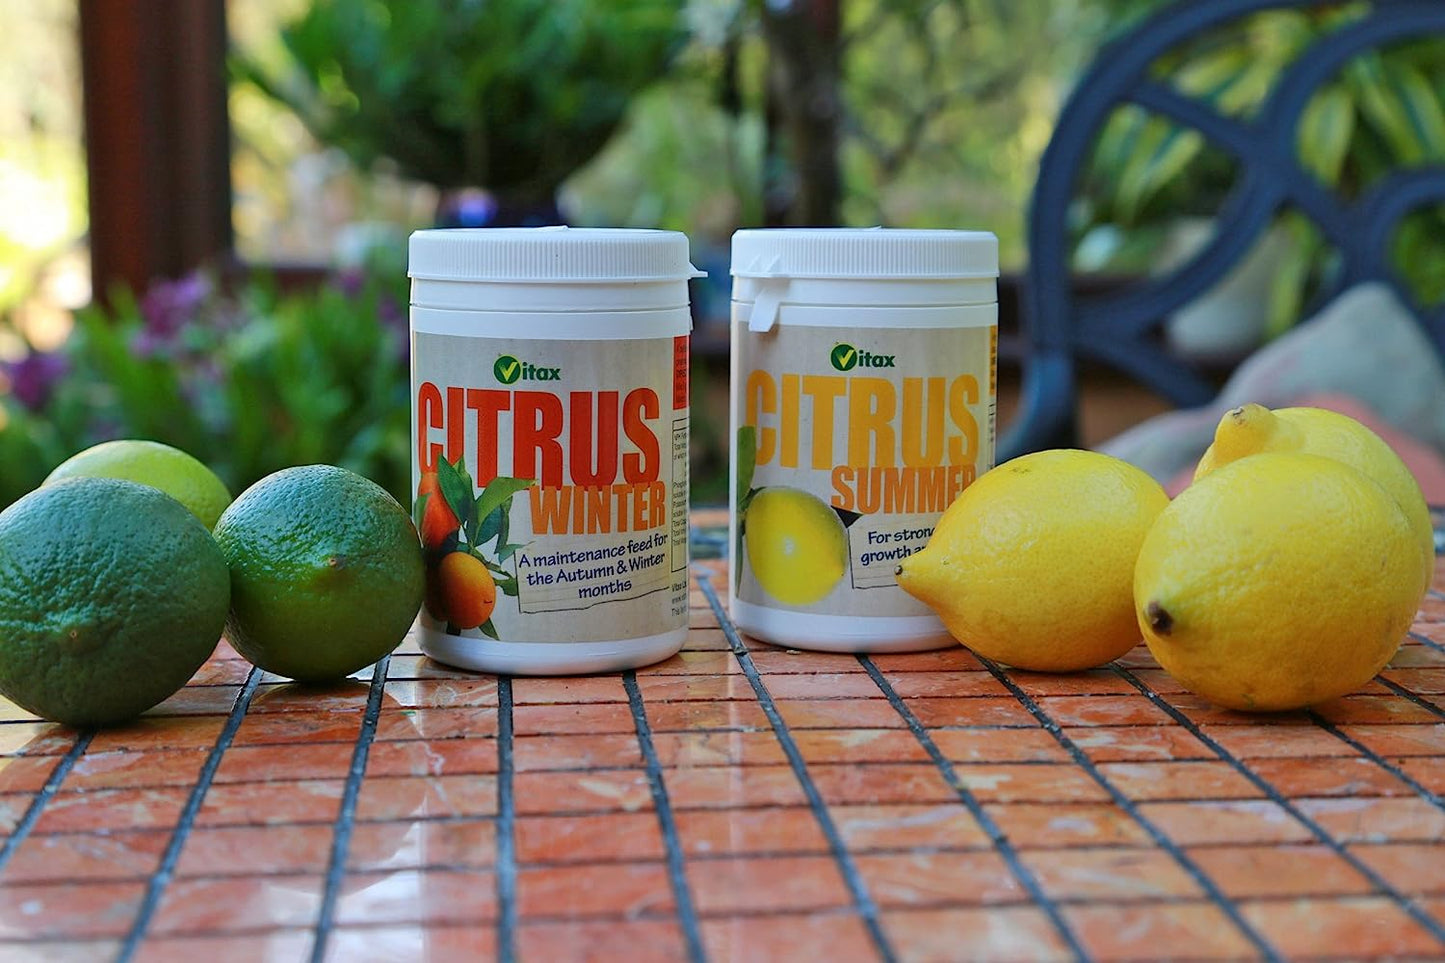 Vitax 200g Citrus Feed for Summer {Tub}